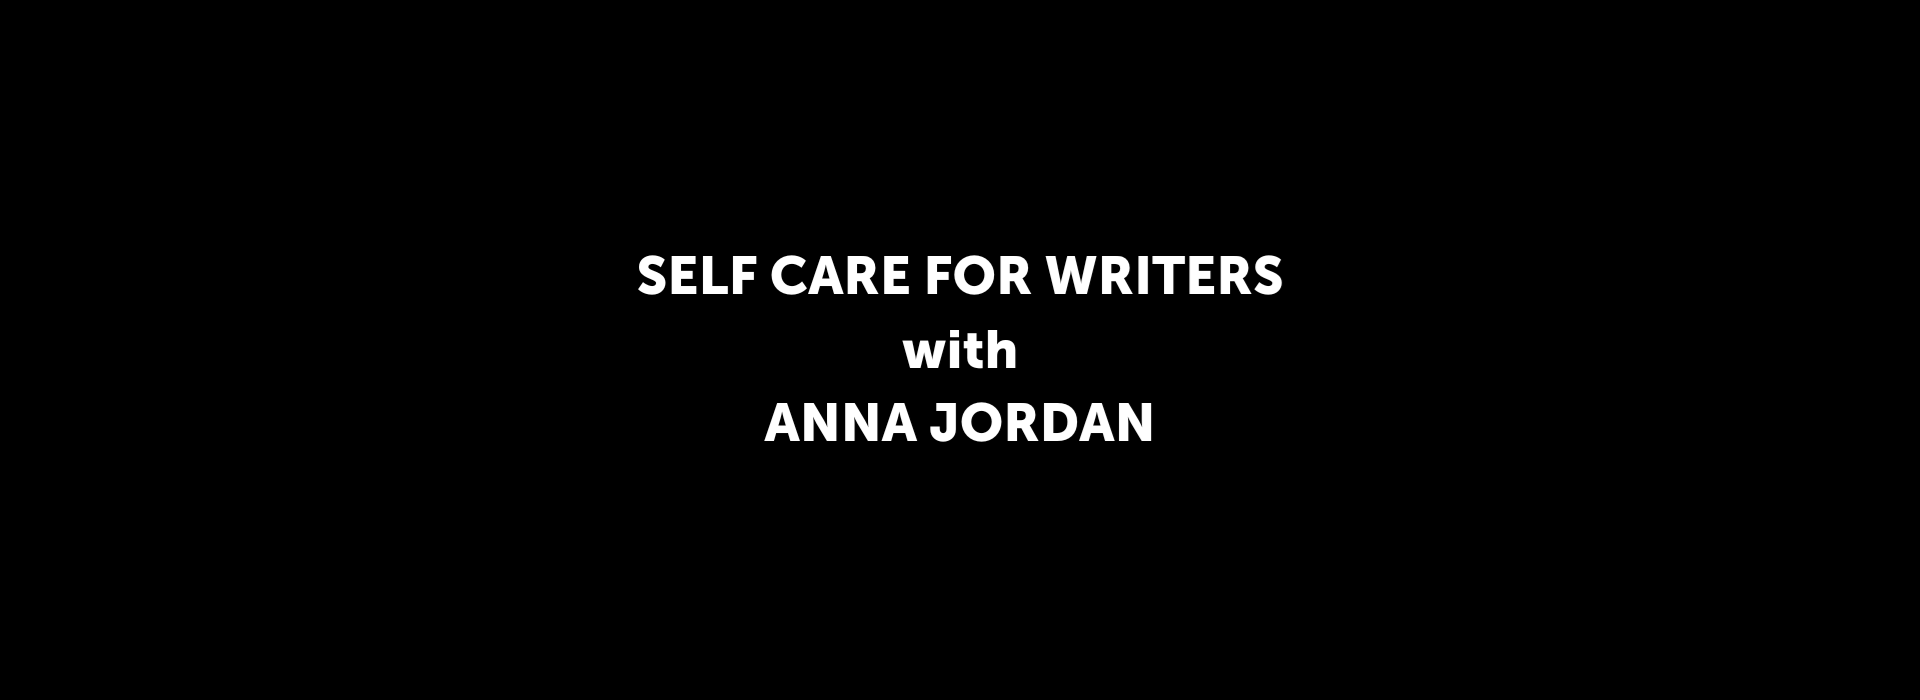 Self Care for Writers - Anna Jordan